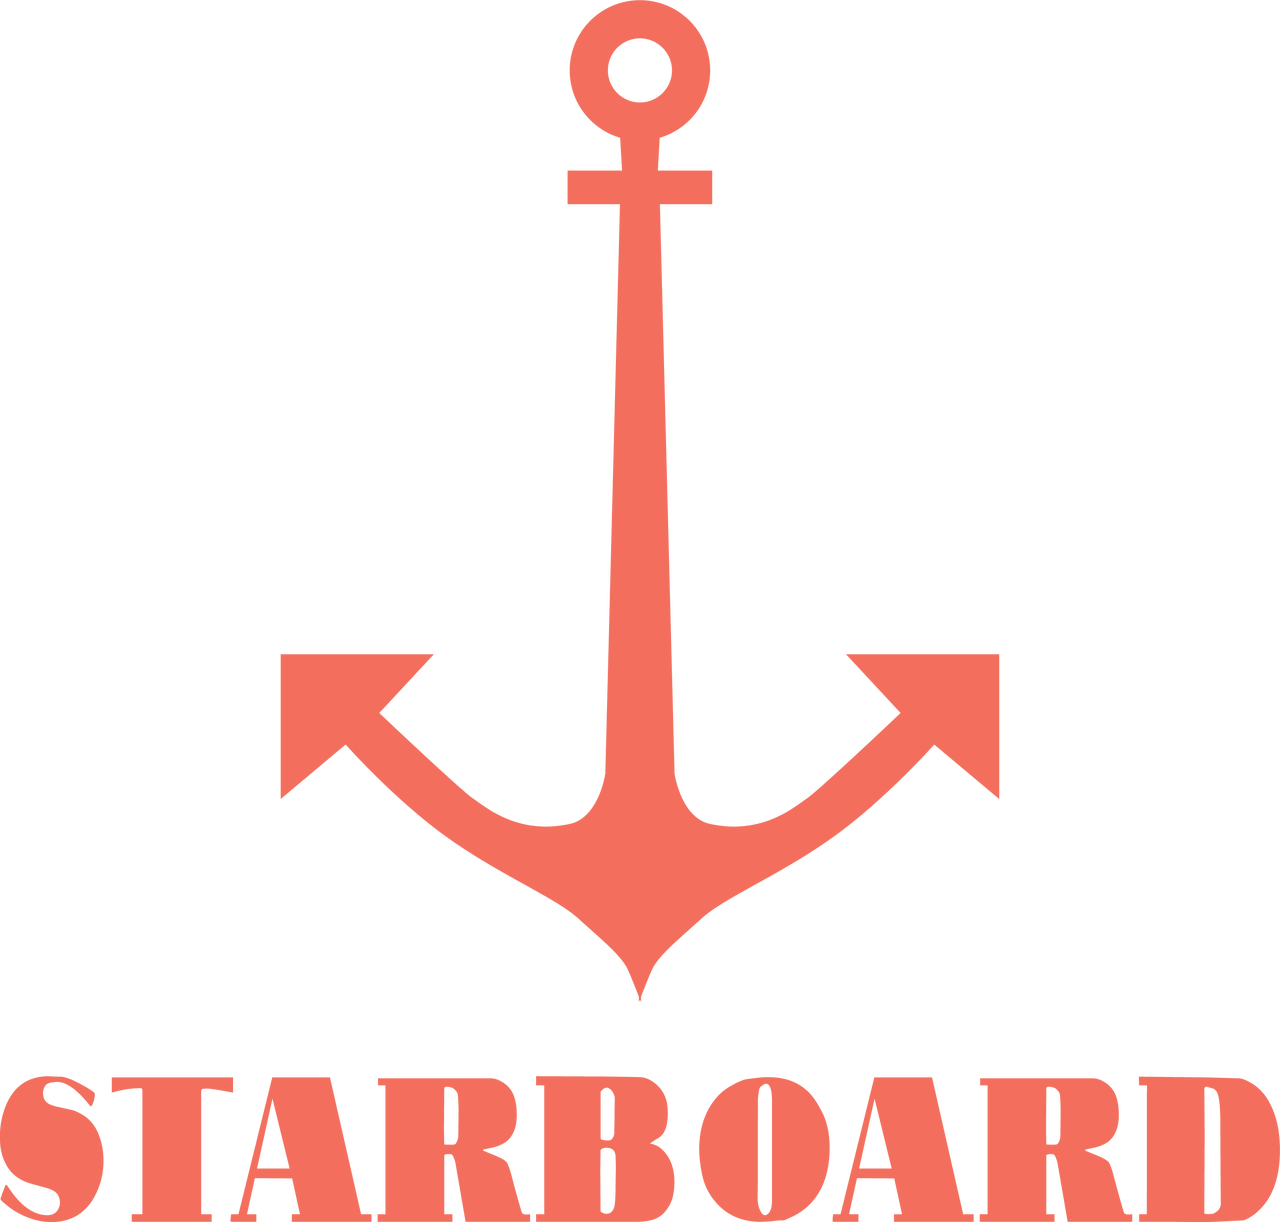 Star Board SVG Cut File